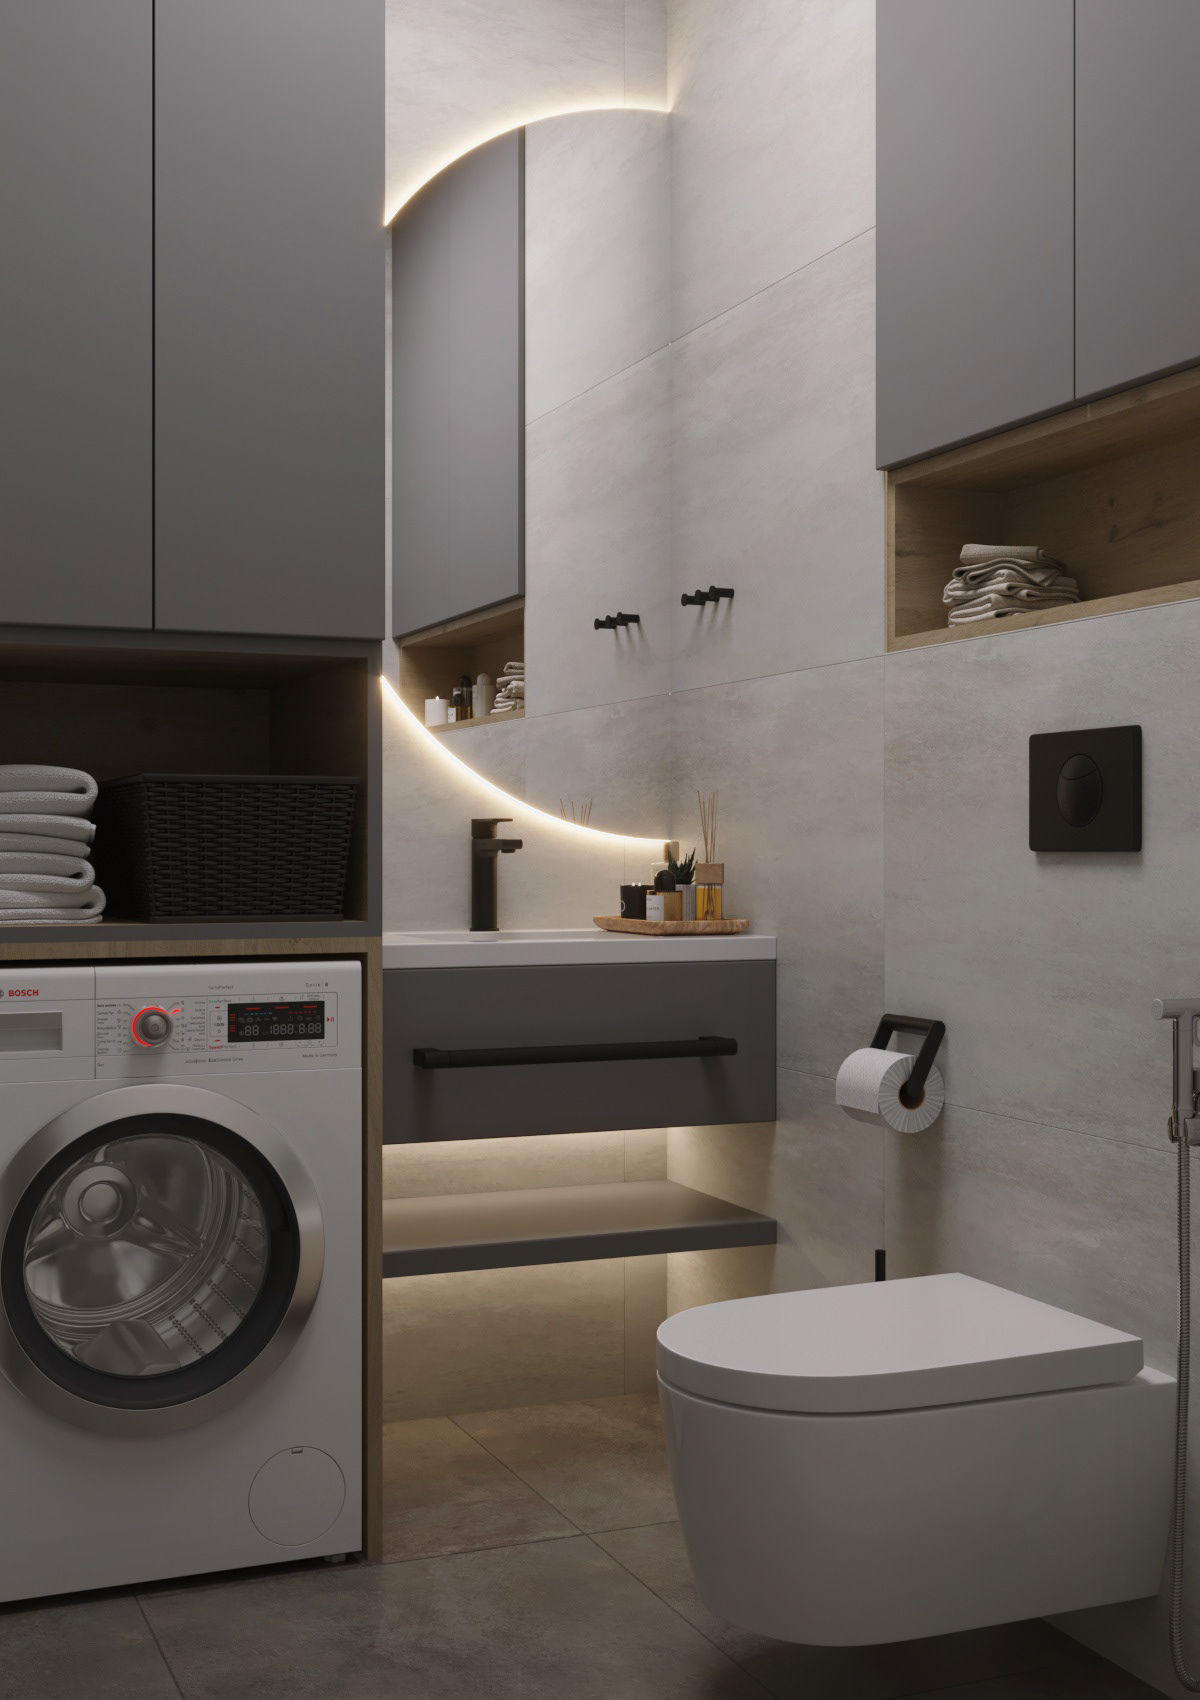 3D 3ds max interior design  Render visualization vray